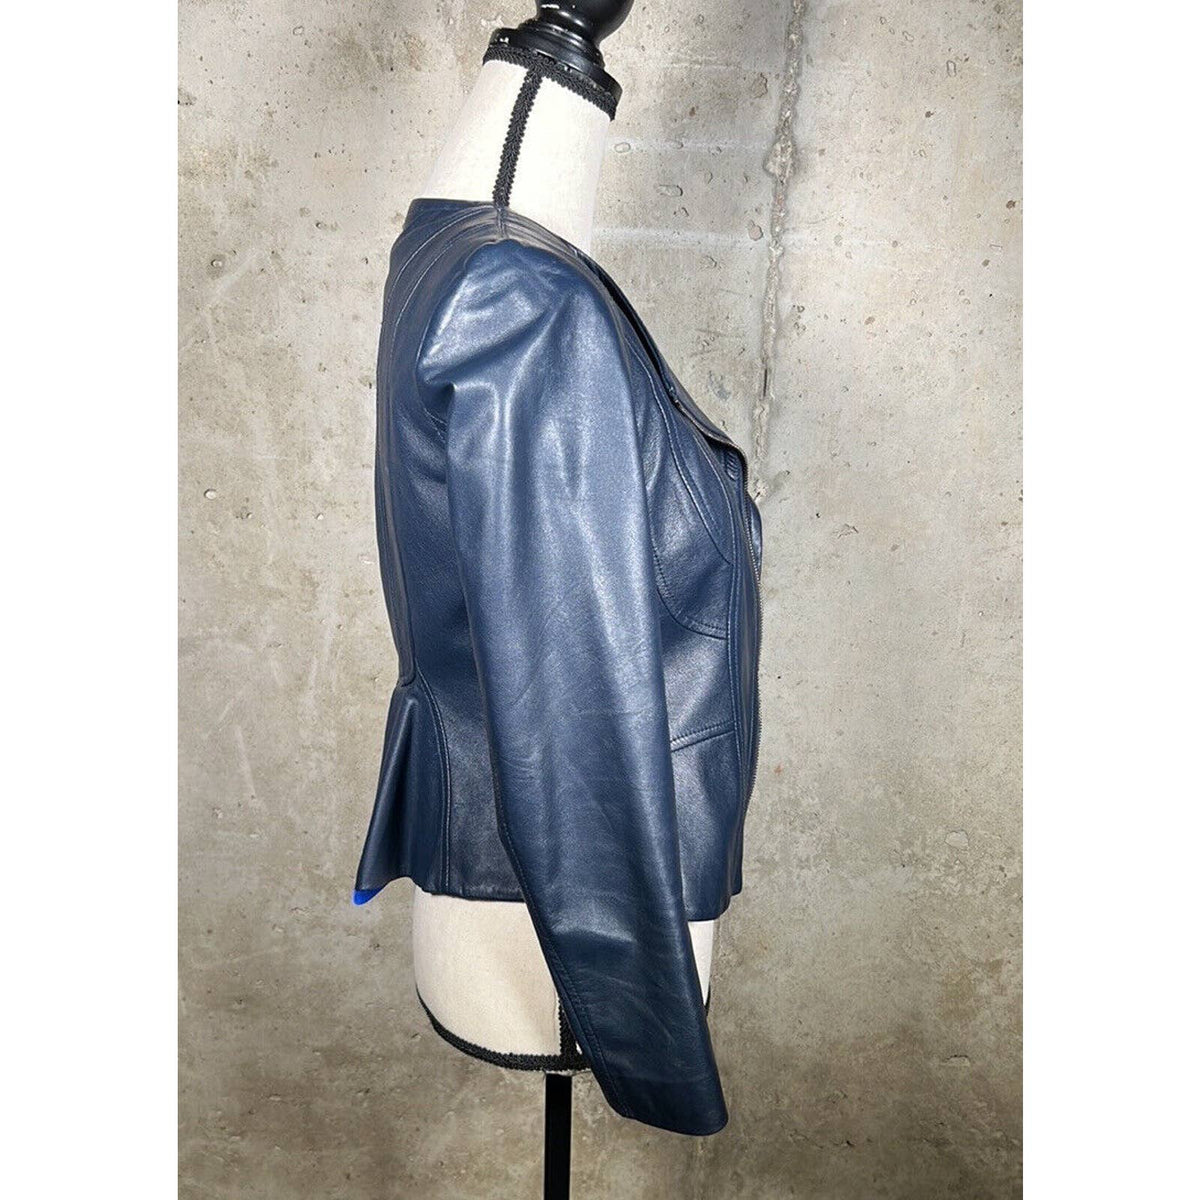 Ellie Tahari Blue 100% Lamb Leather Moto Jacket Sz. XS